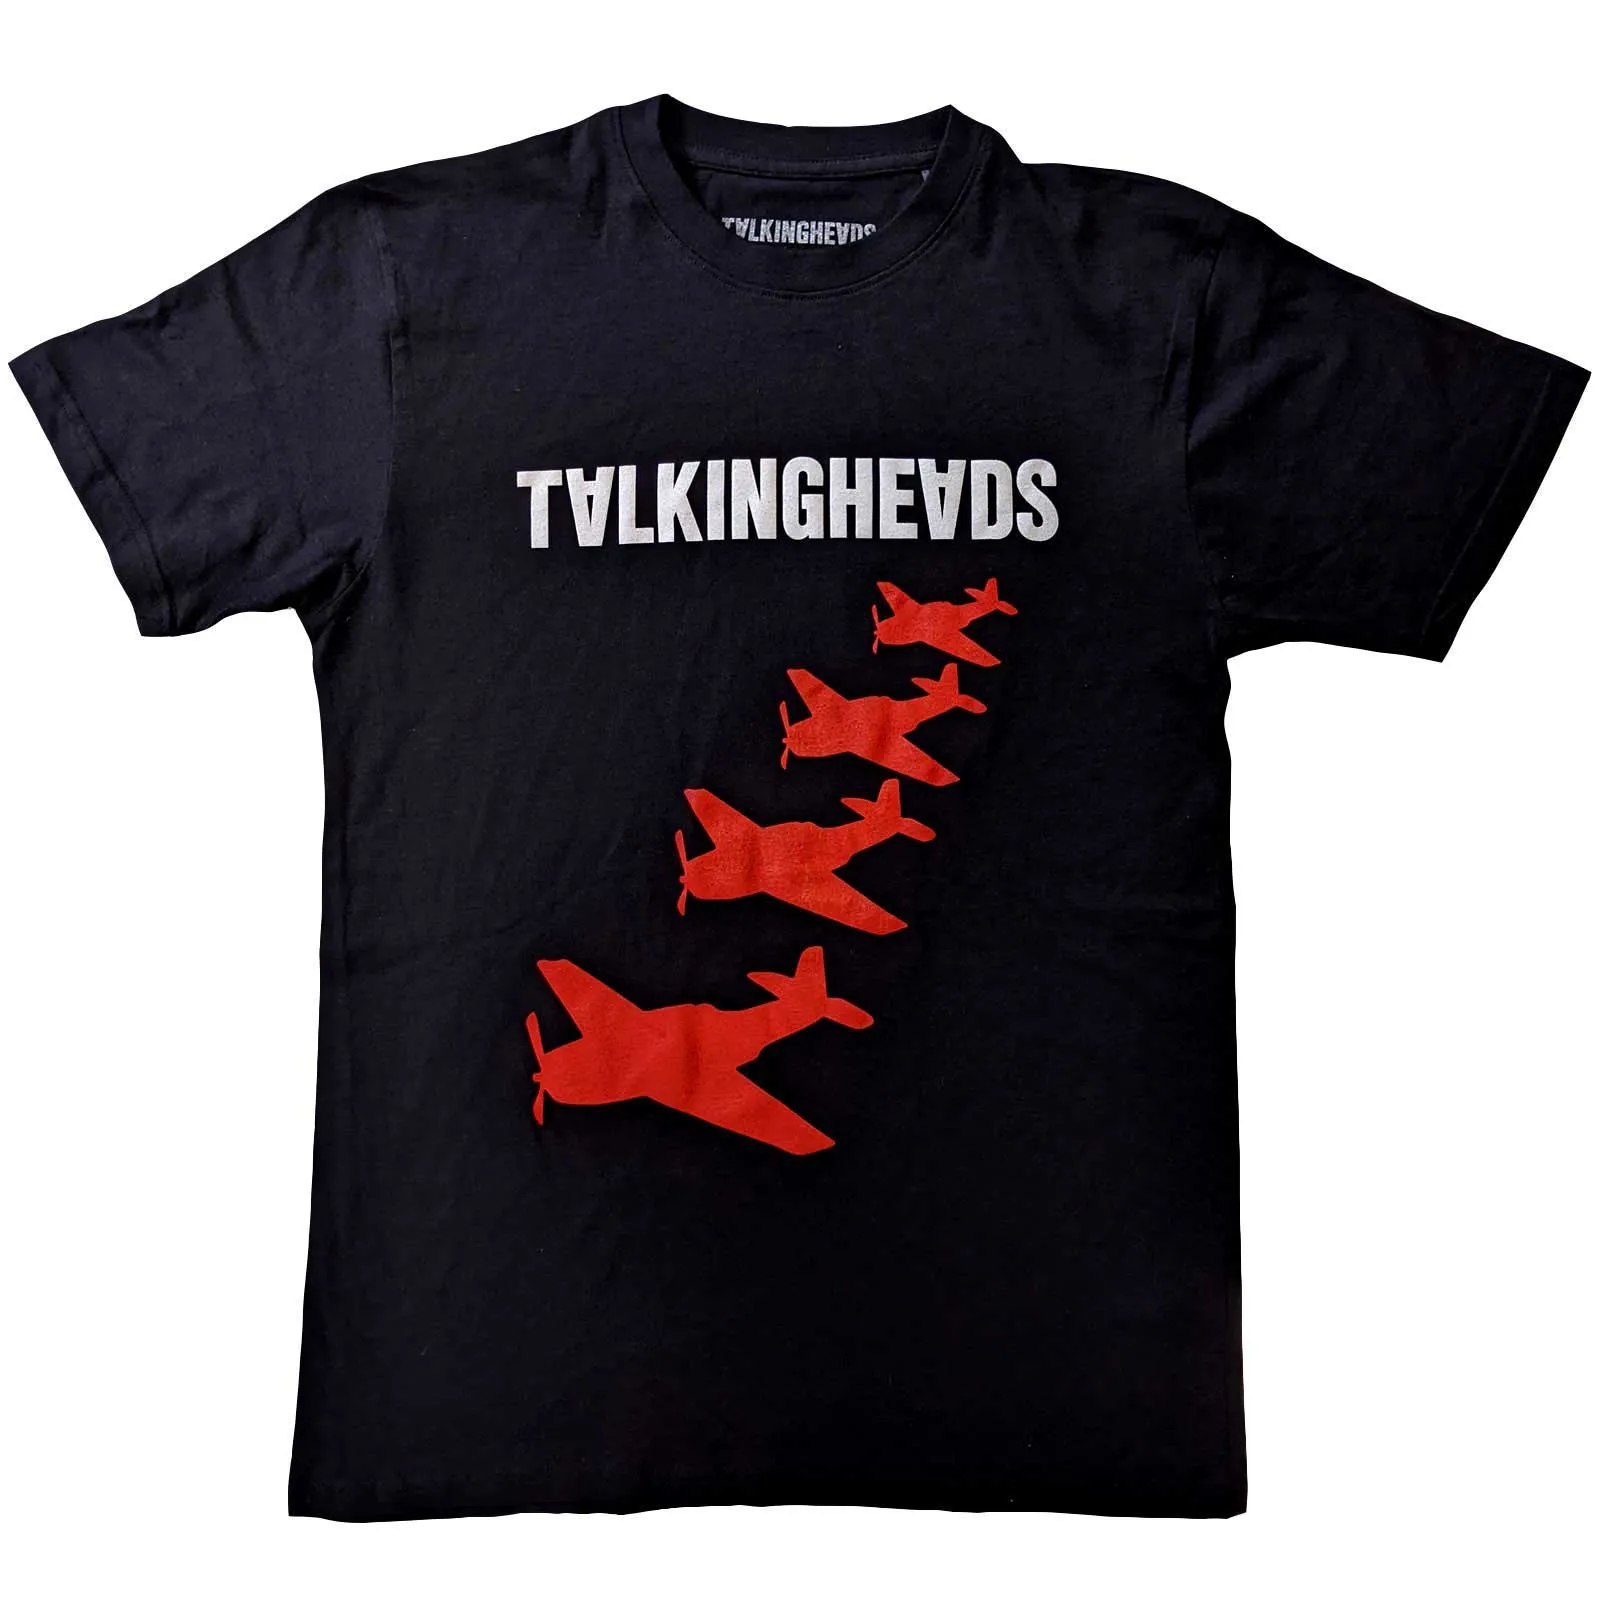 Talking Heads - Unisex T-Shirt 4 Planes artwork